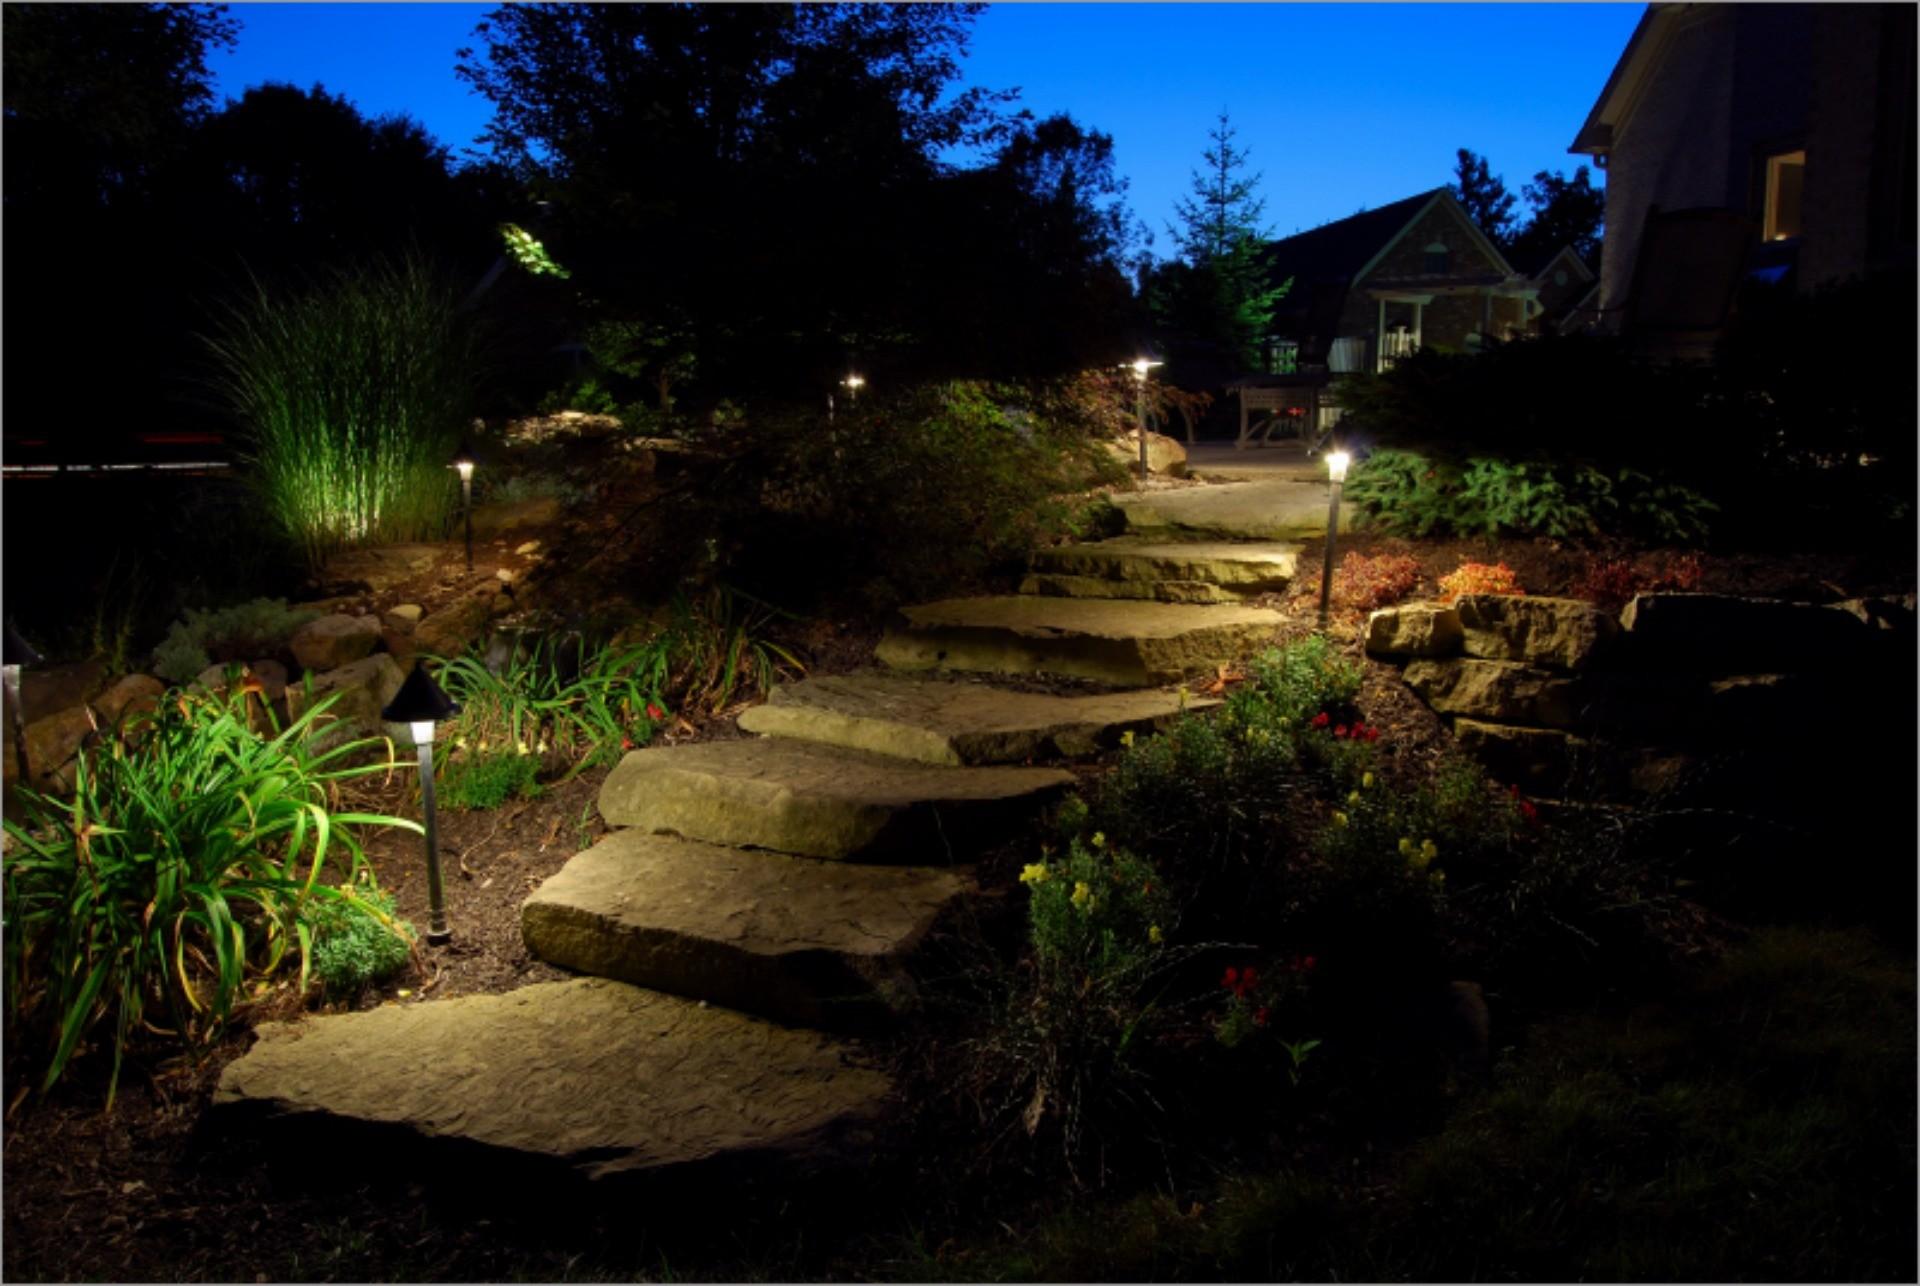 creative pathway lighting to illuminate steps